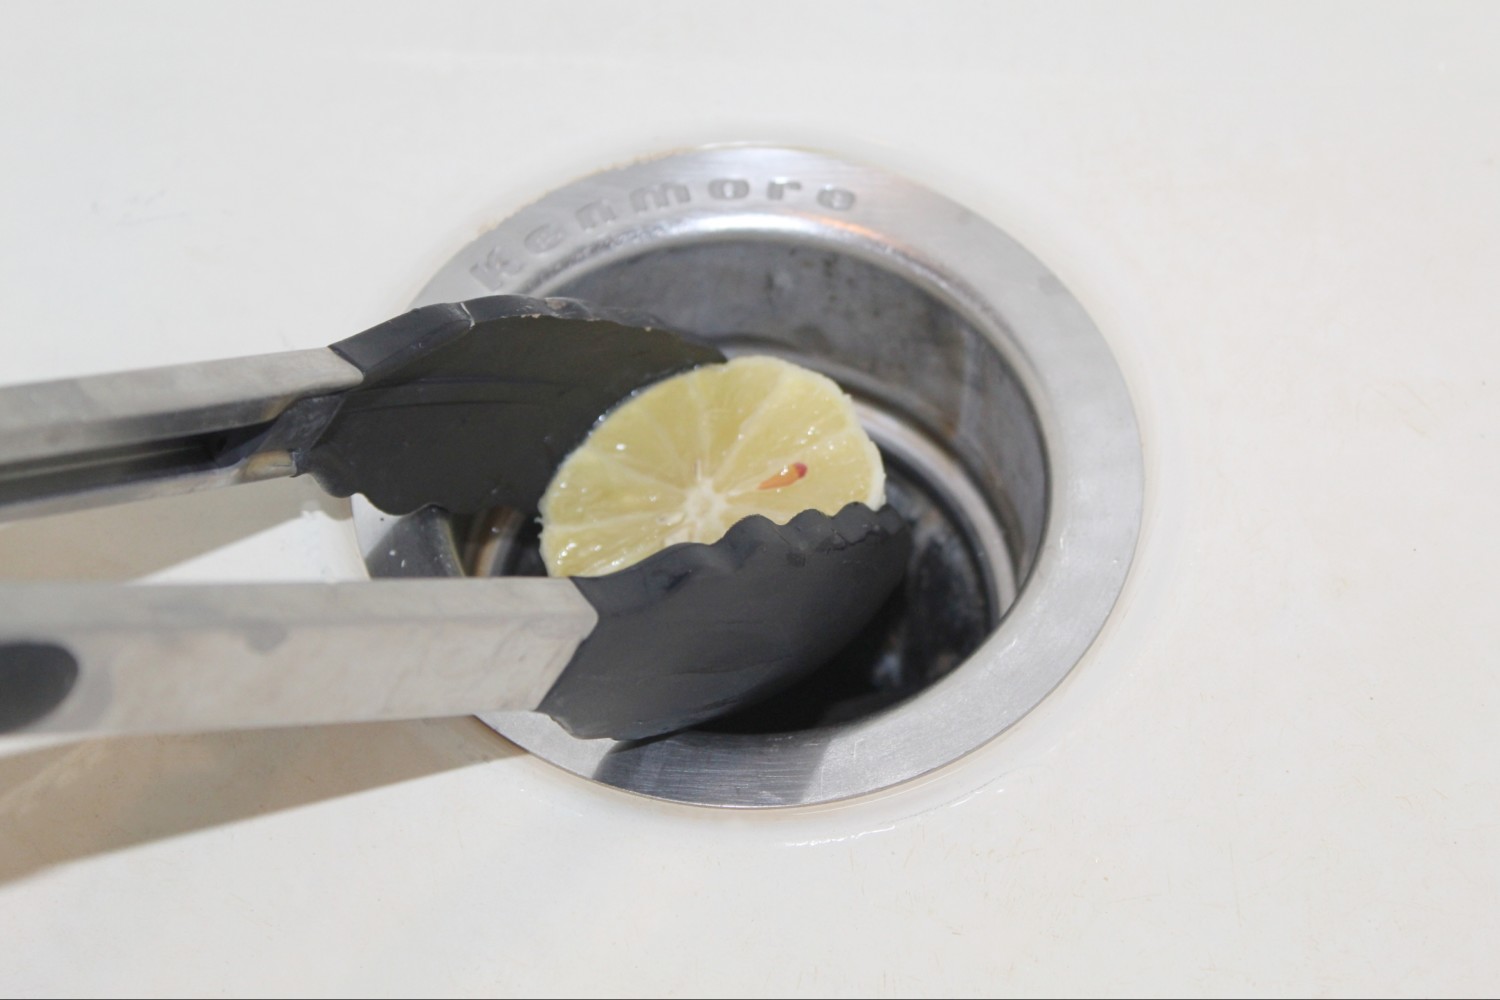 tongs placing lemon half in garbage disposal